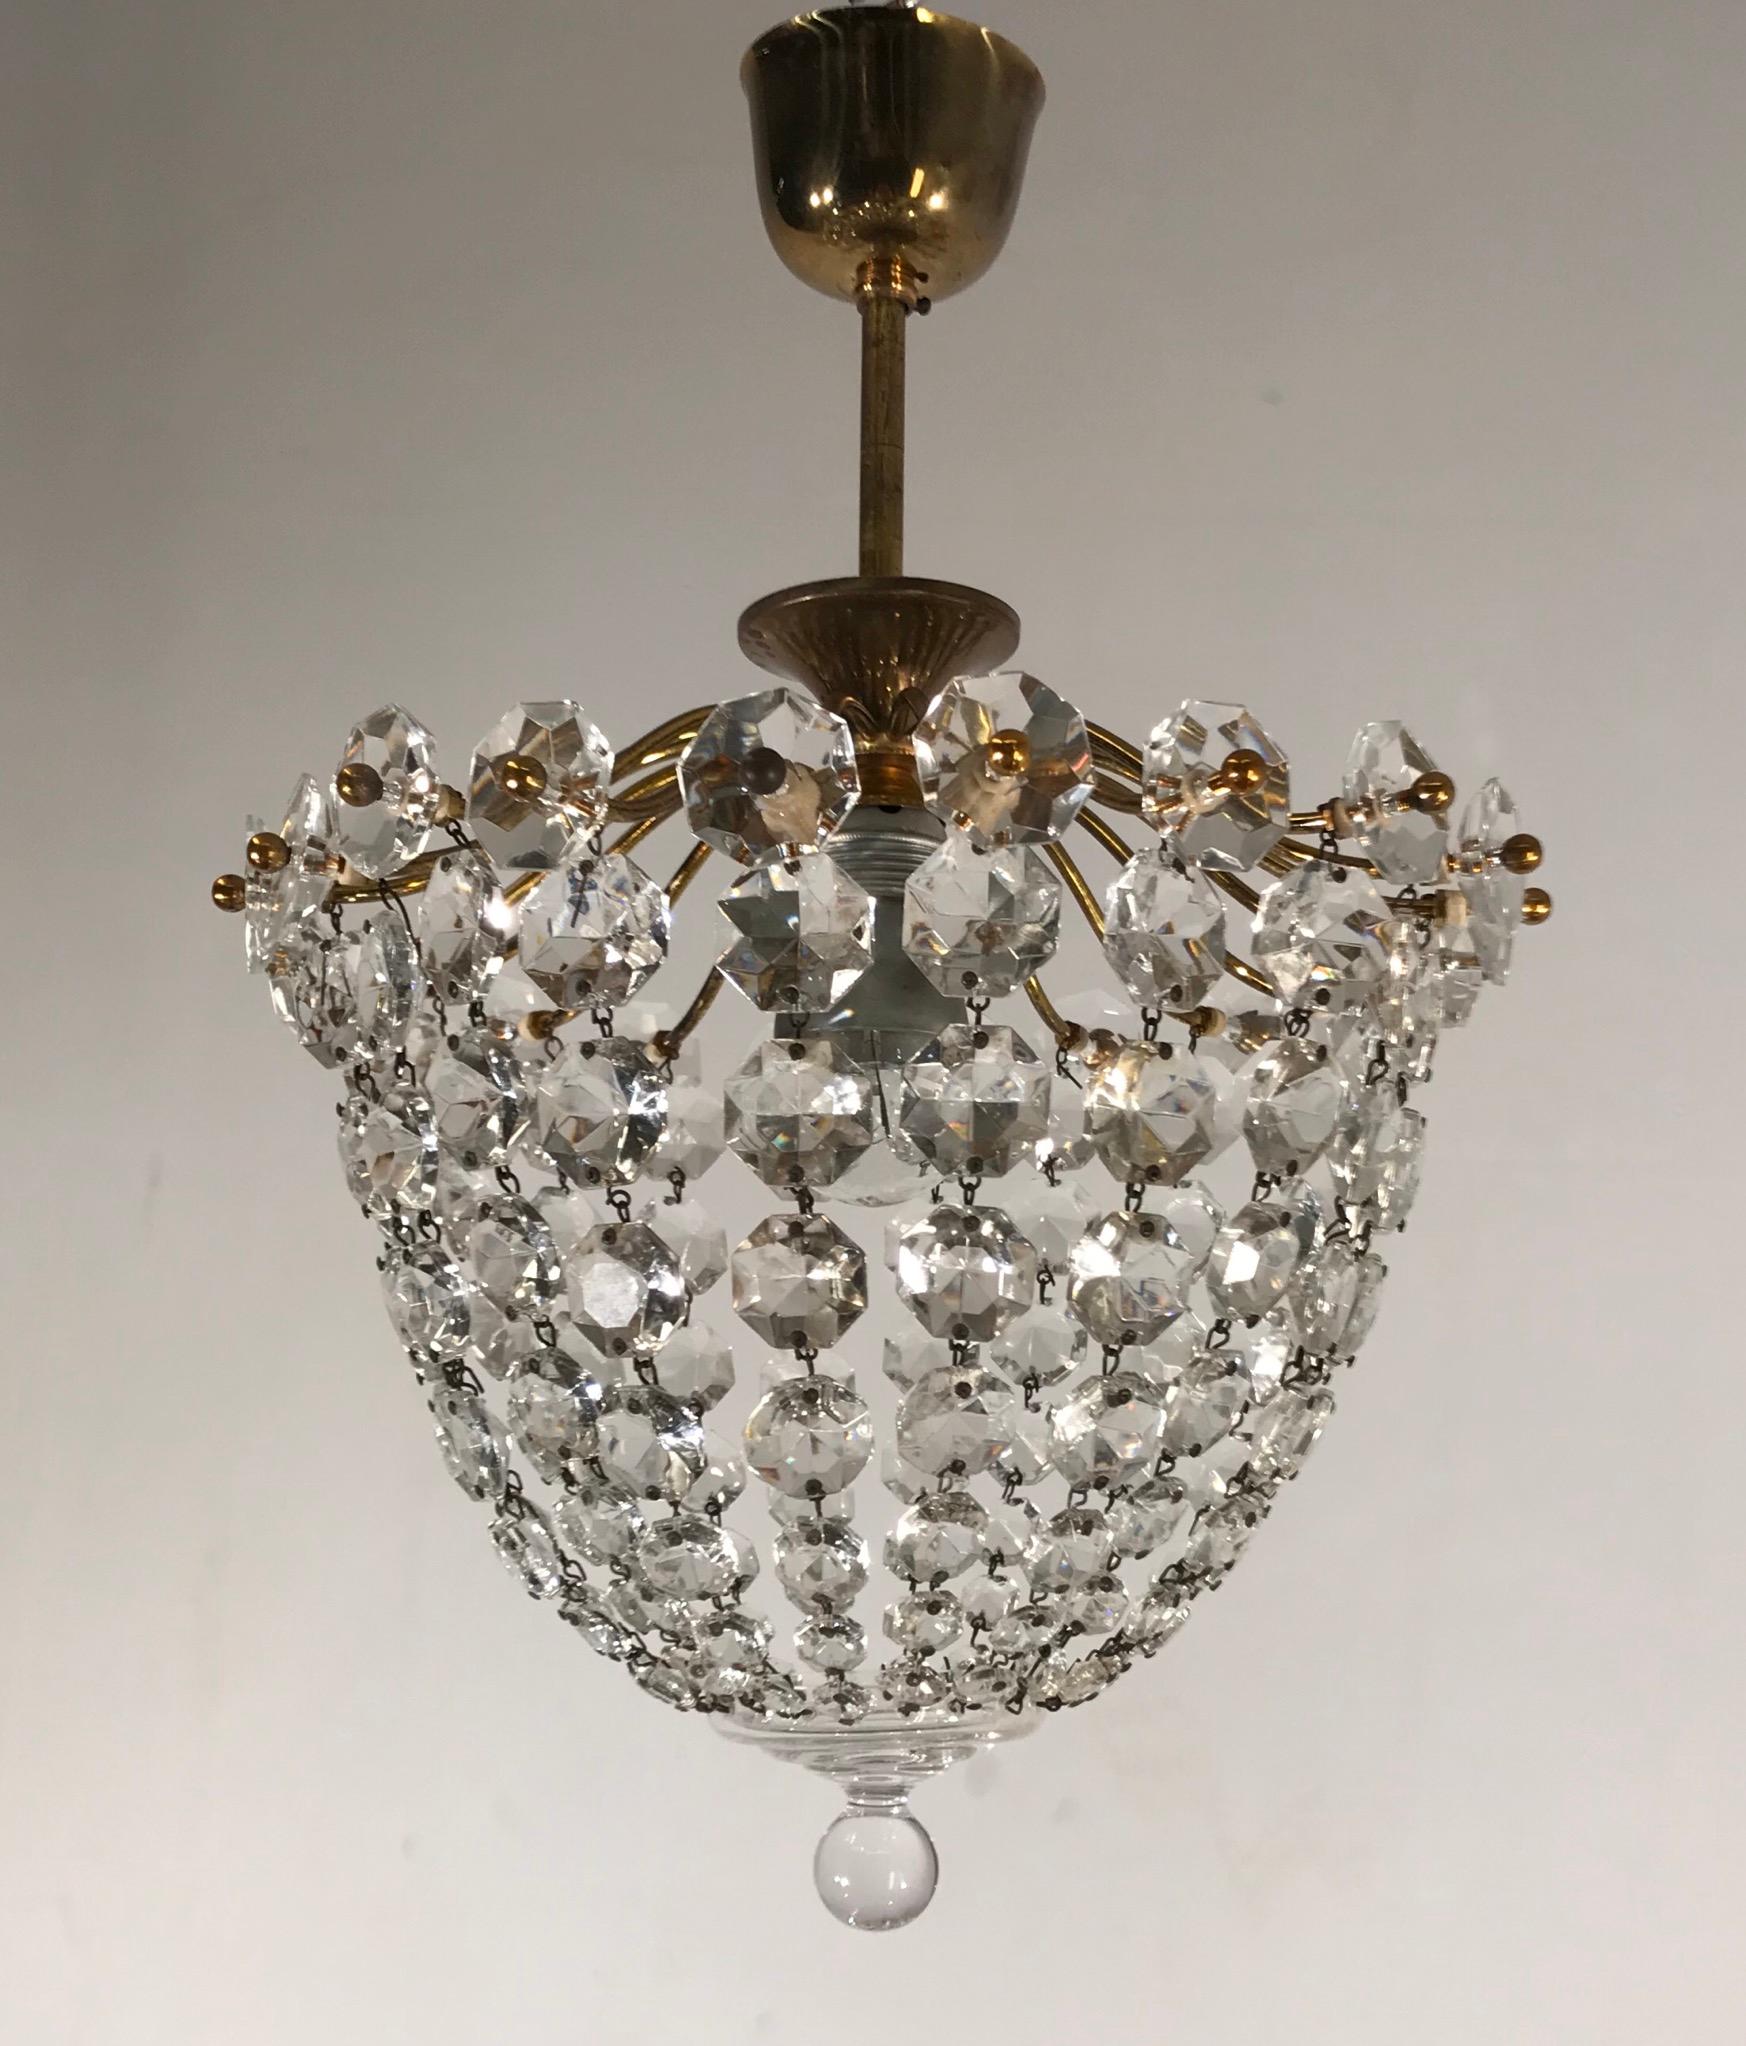 Italian Stylish Little Midcentury Brass and Crystal Glass Murano Pendant Light Fixture